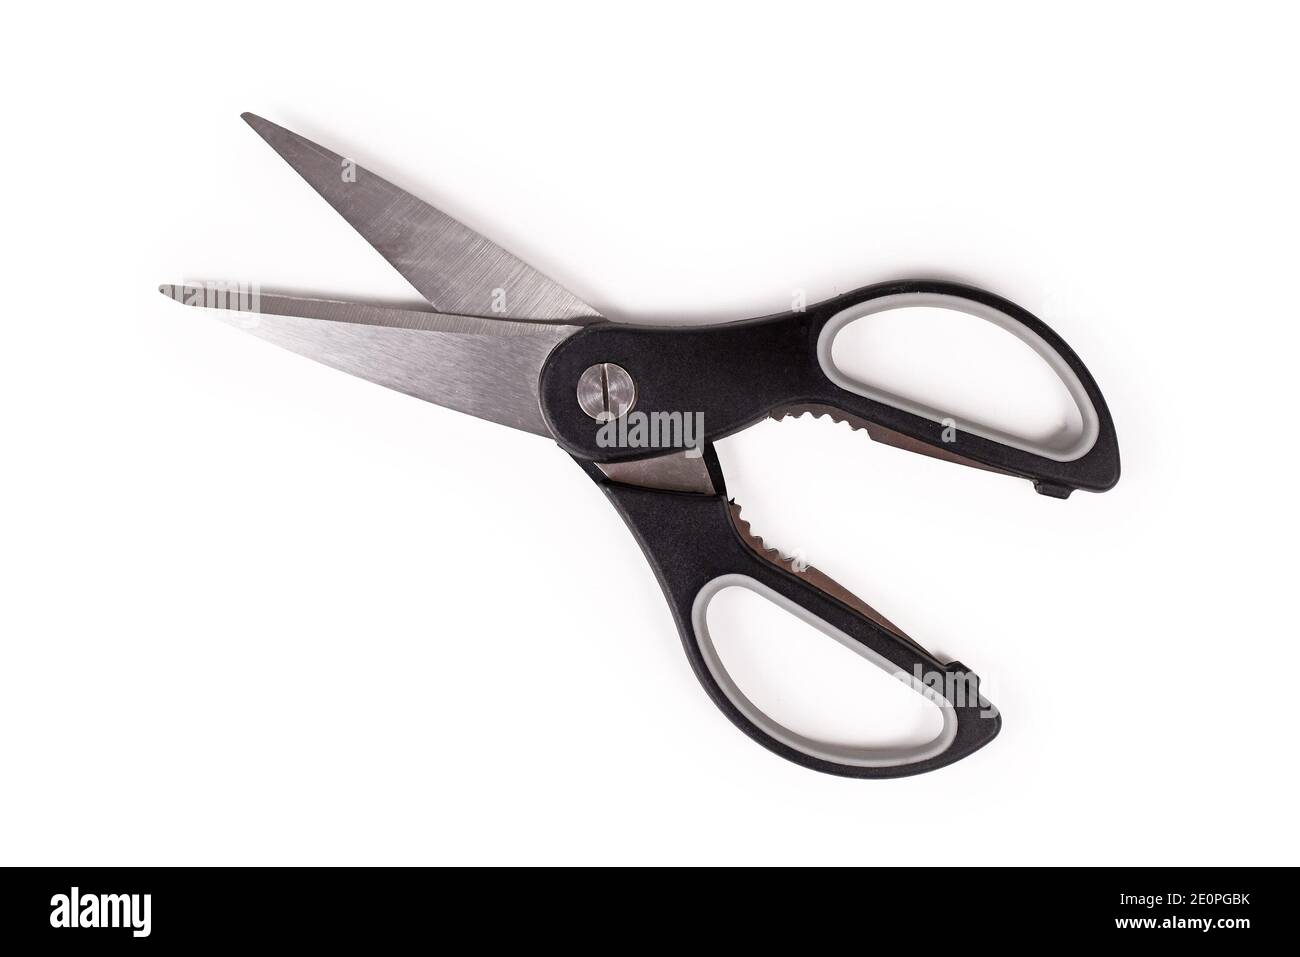 Fiskars kitchen scissors, herb scissors and poultry shears